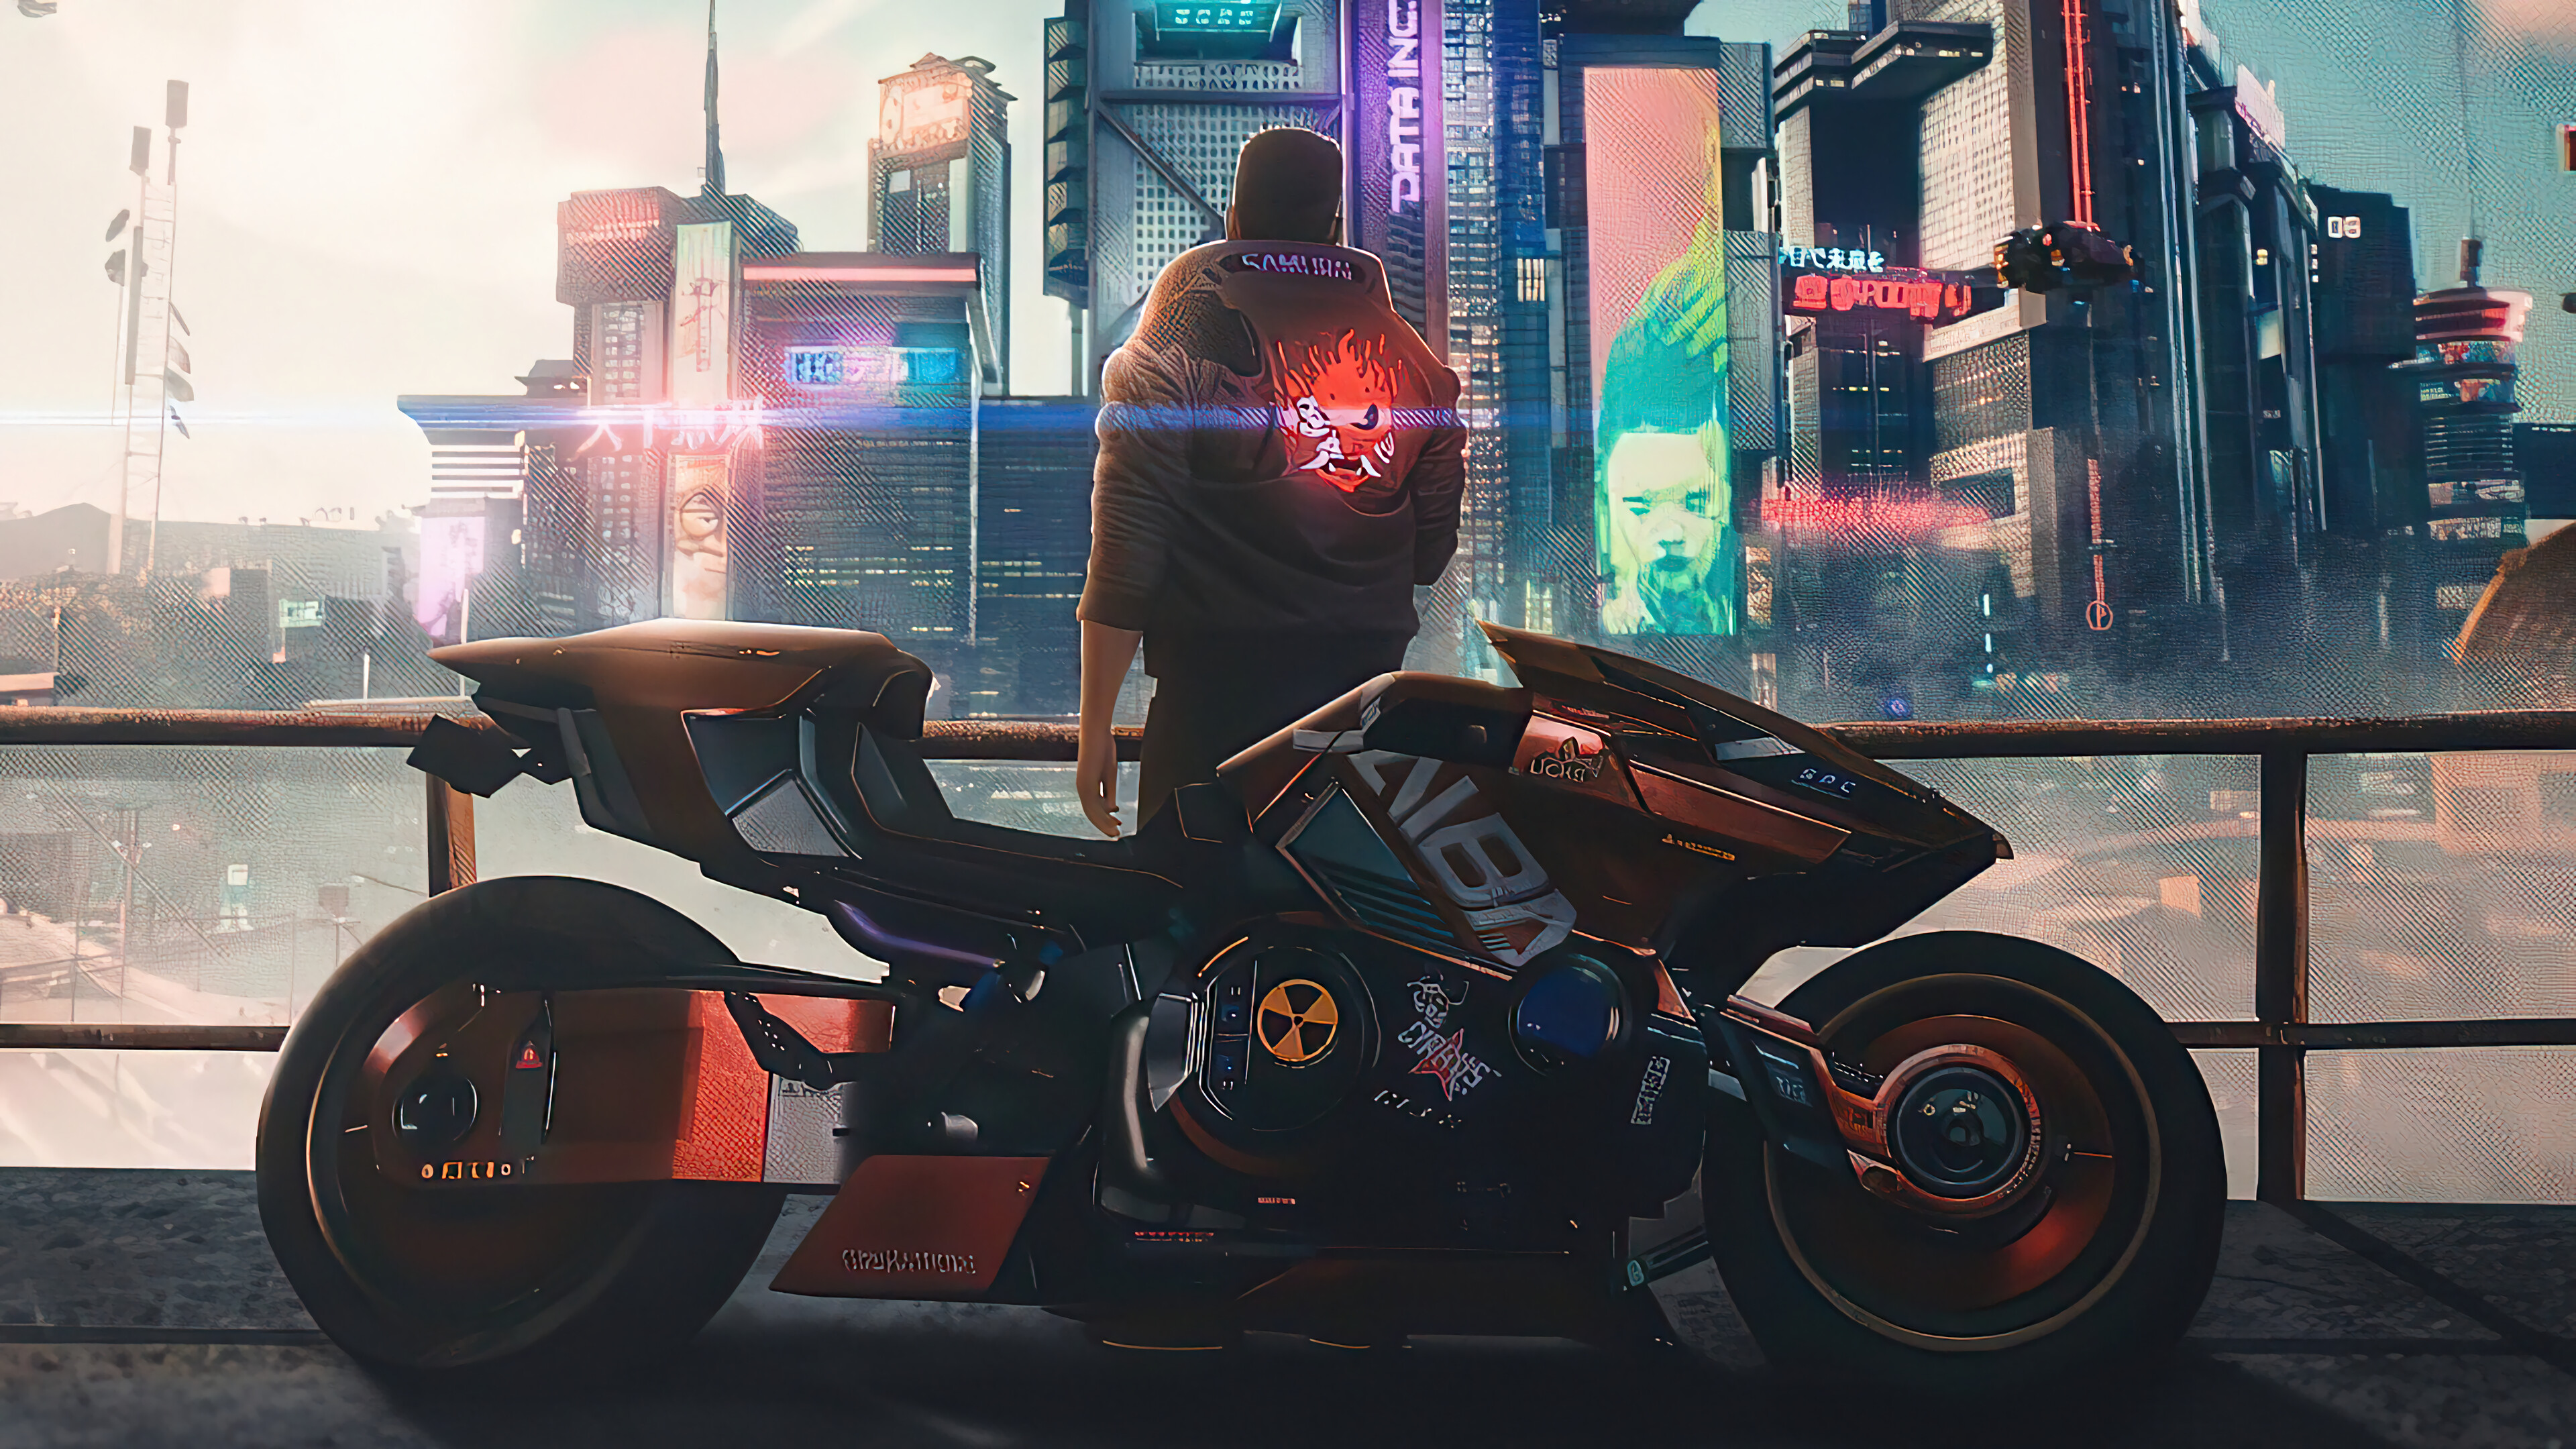 Biker Motorcycle Vehicle Video Games City Cyberpunk 2077 Building Video Game Art Futuristic ARCH Mot 3840x2160